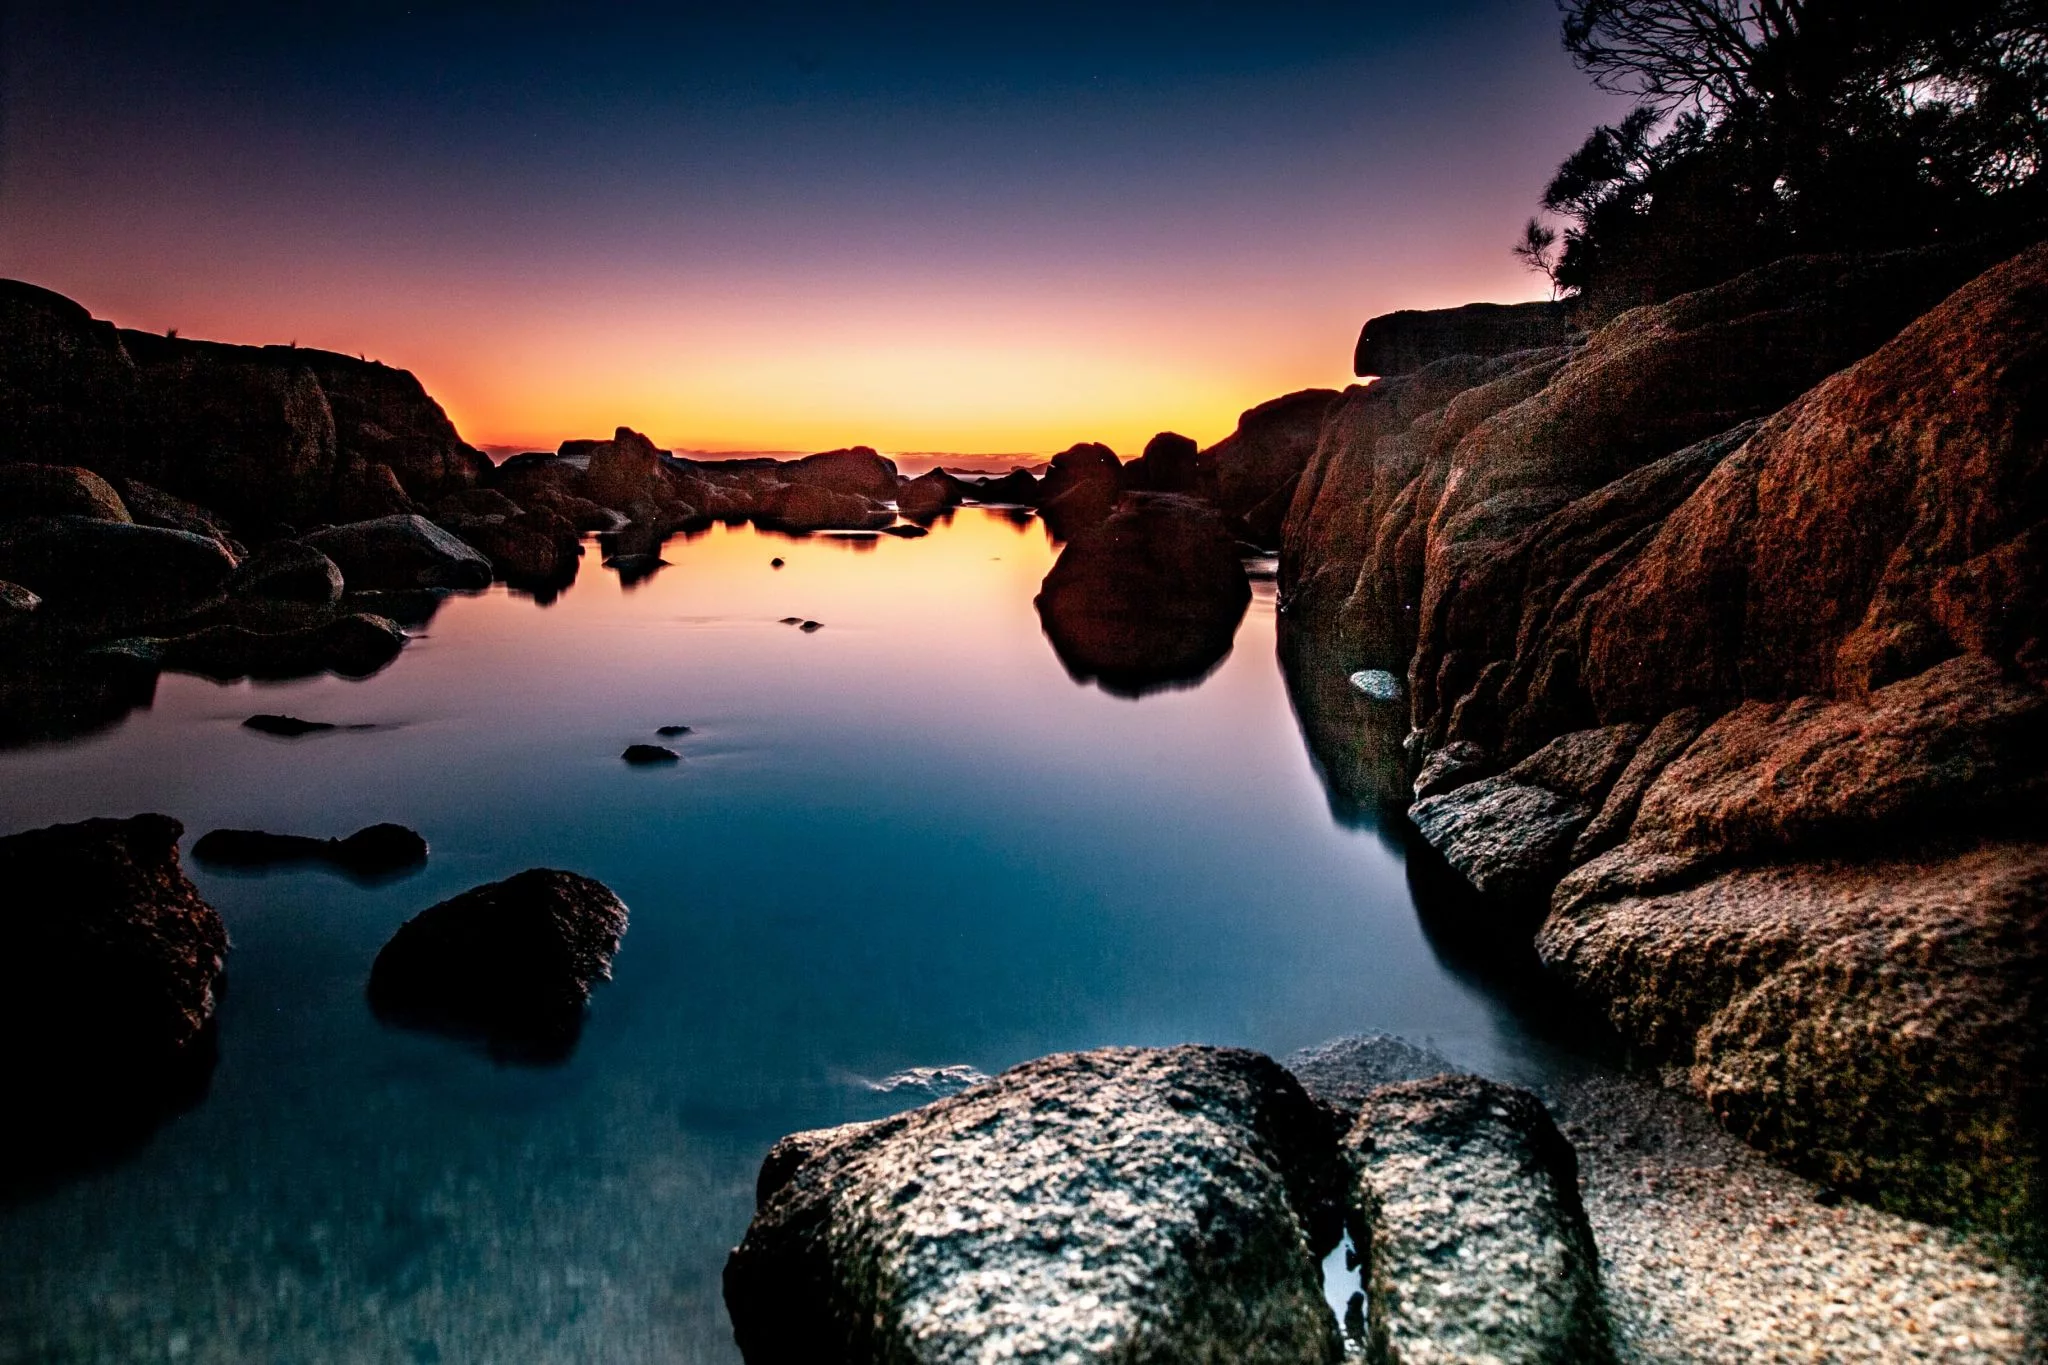 Binalong Bay sunrise Tasmania, Australia